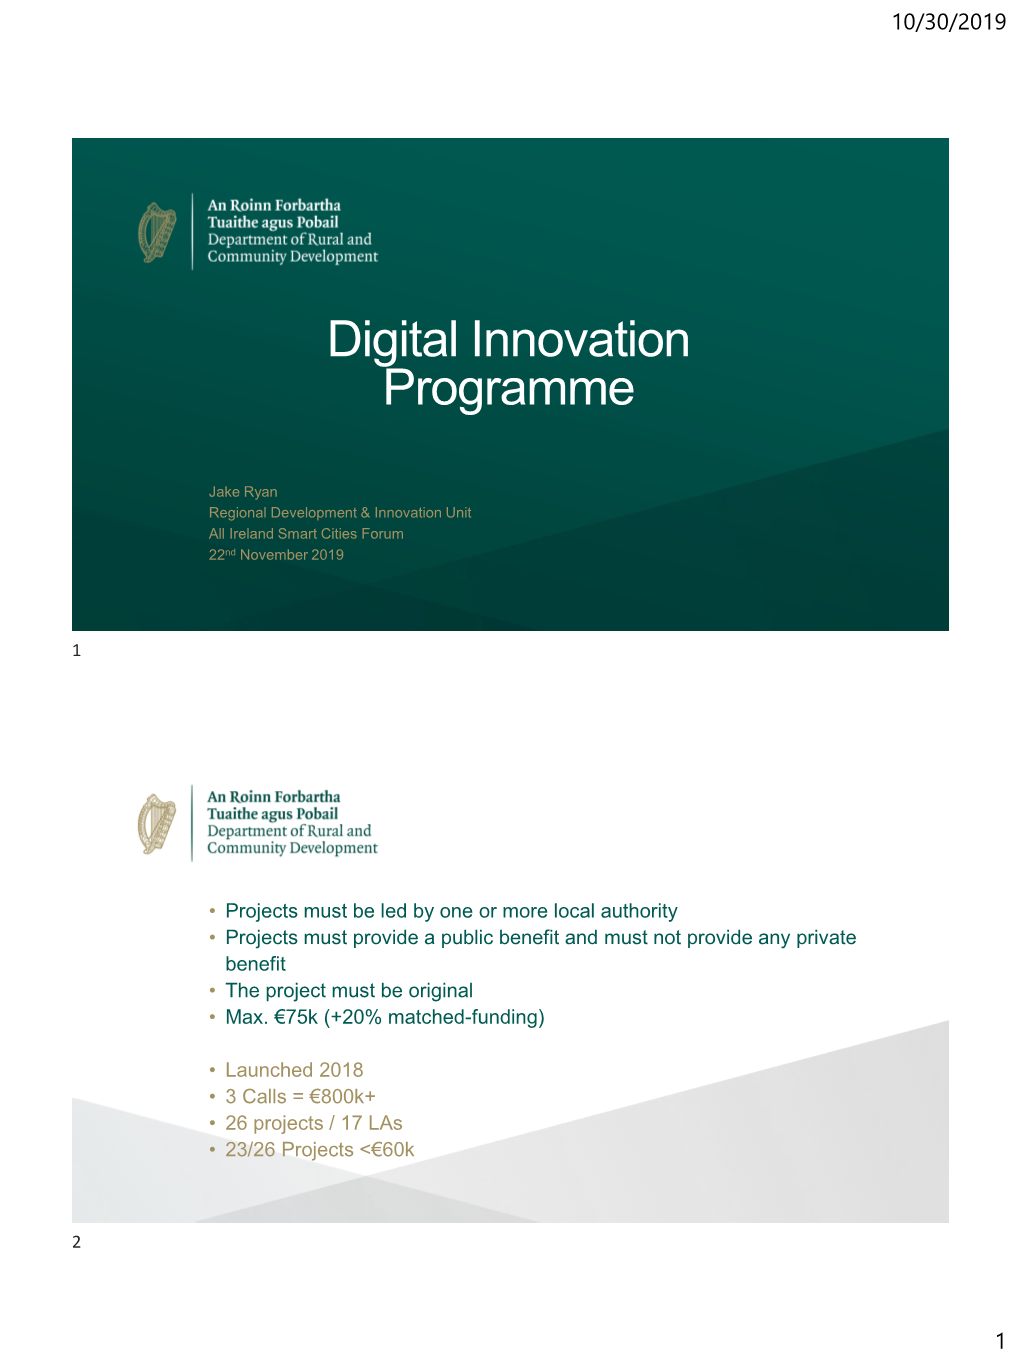 Digital Innovation Programme